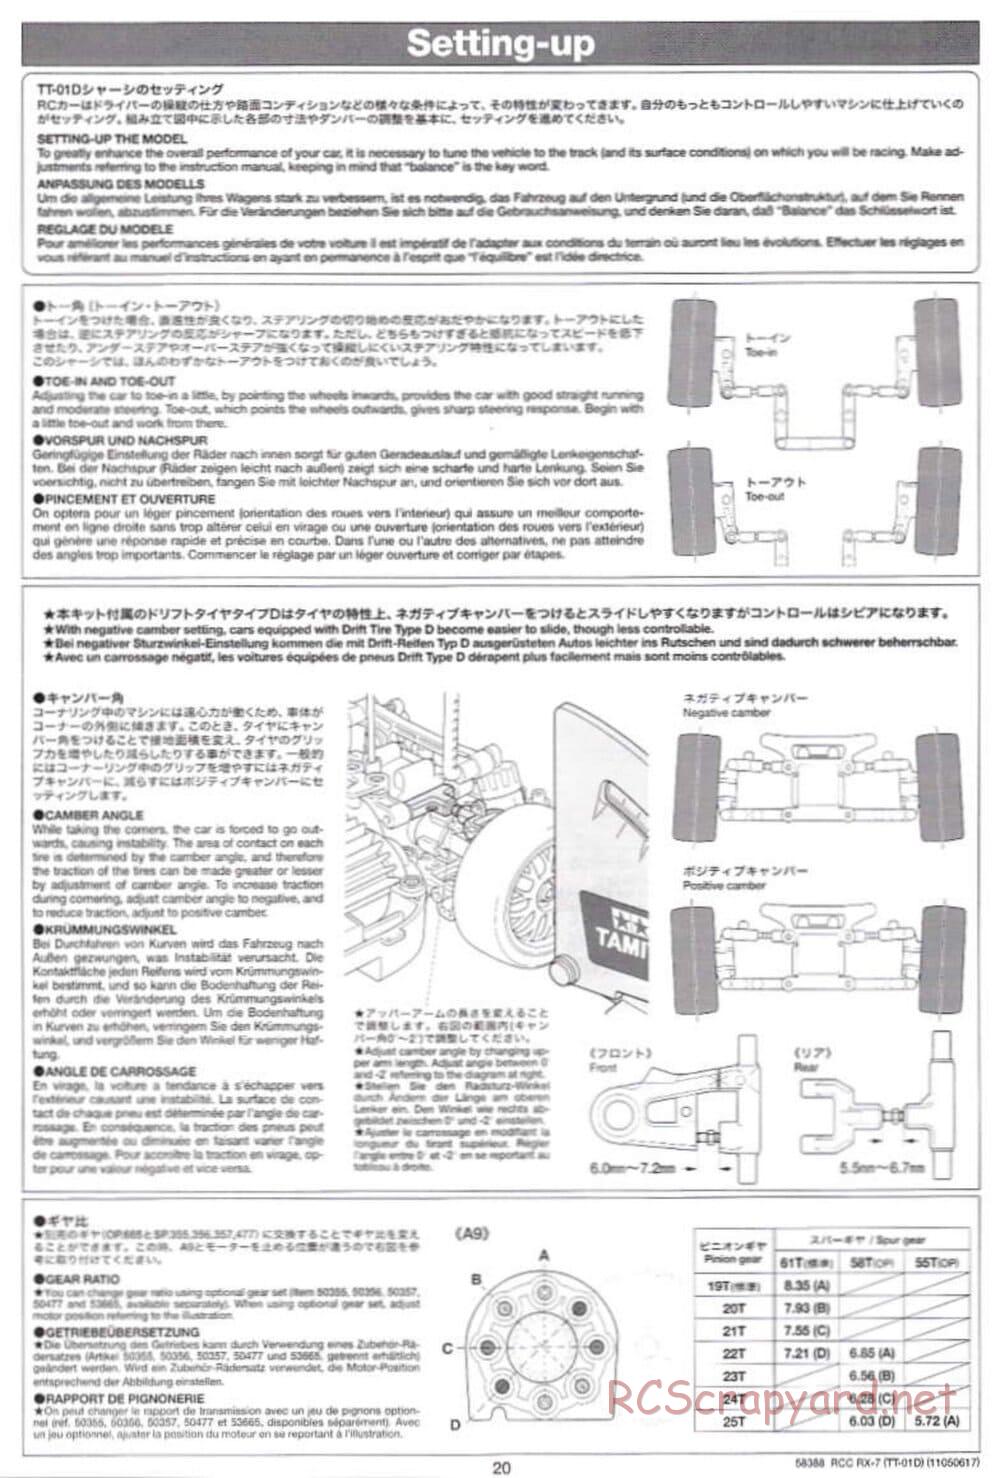 Tamiya - Mazda RX-7 - Drift Spec - TT-01D Chassis - Manual - Page 20